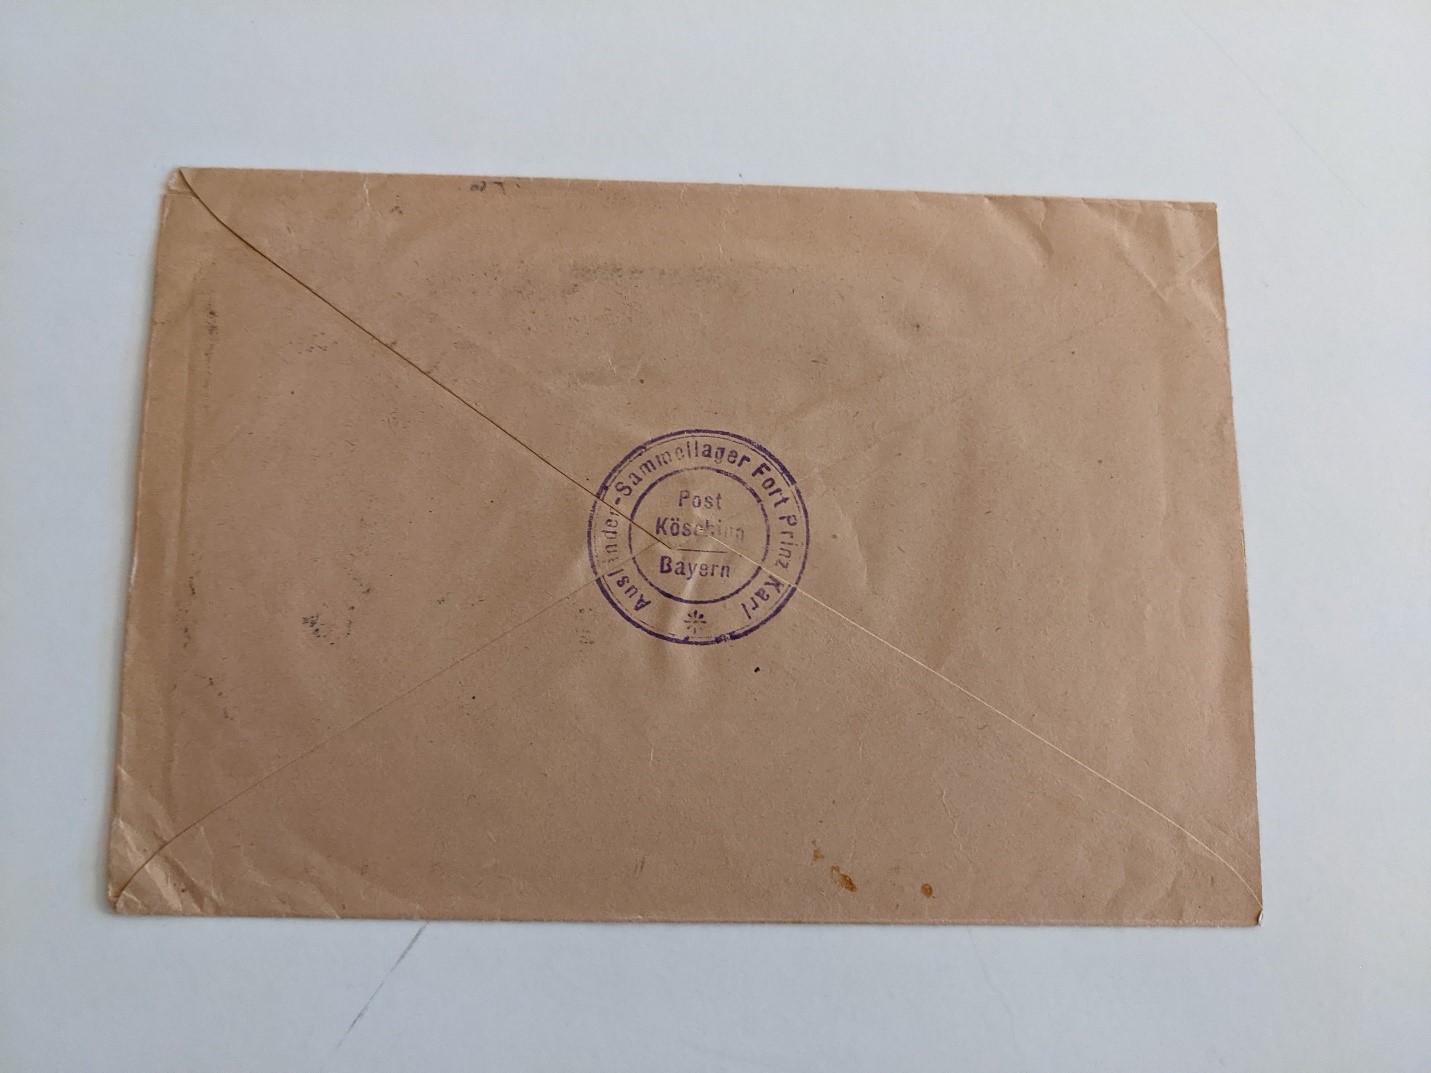 a closed envelope